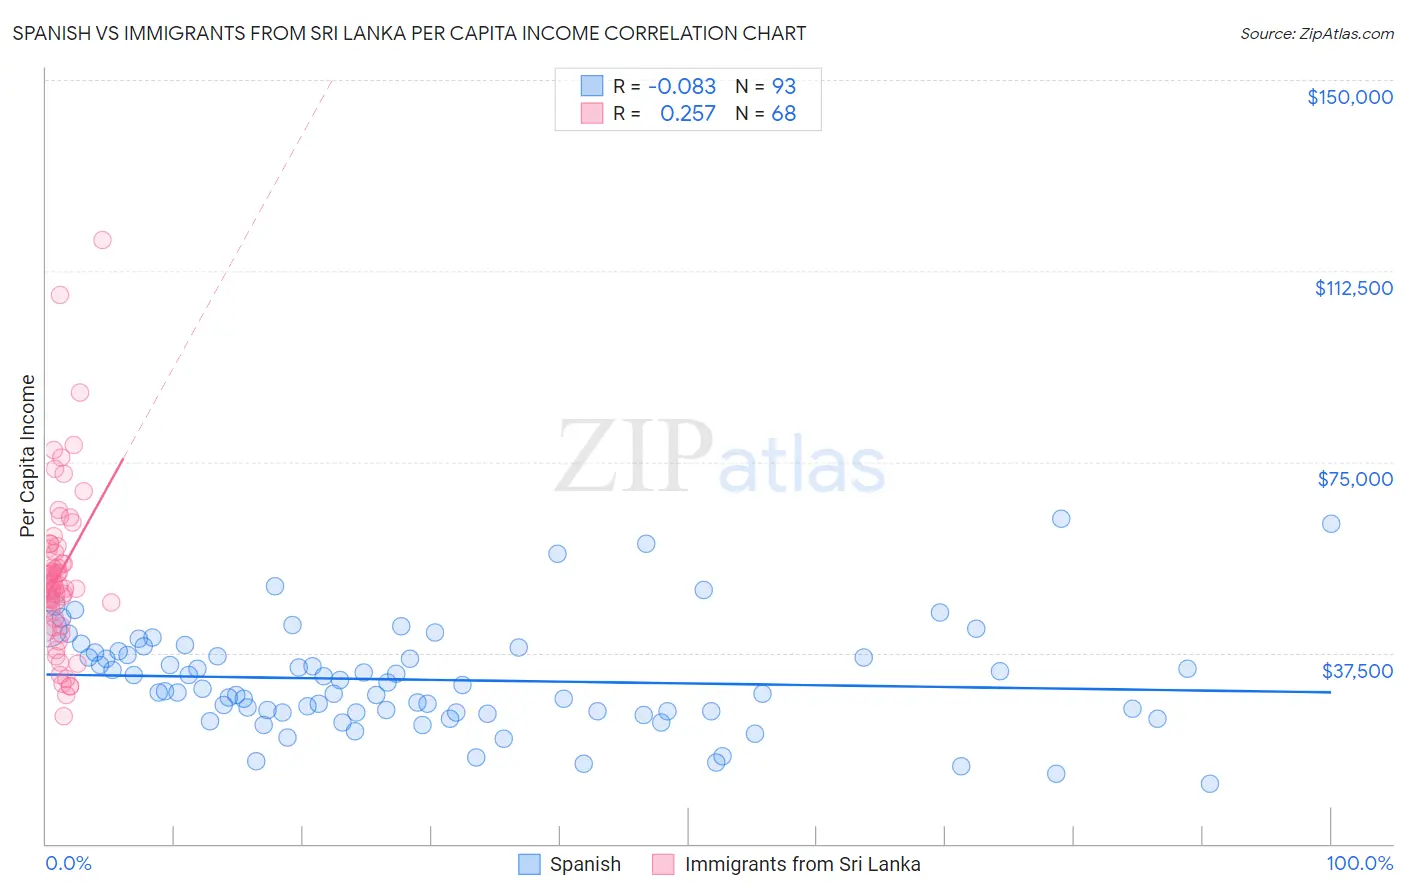 Spanish vs Immigrants from Sri Lanka Per Capita Income